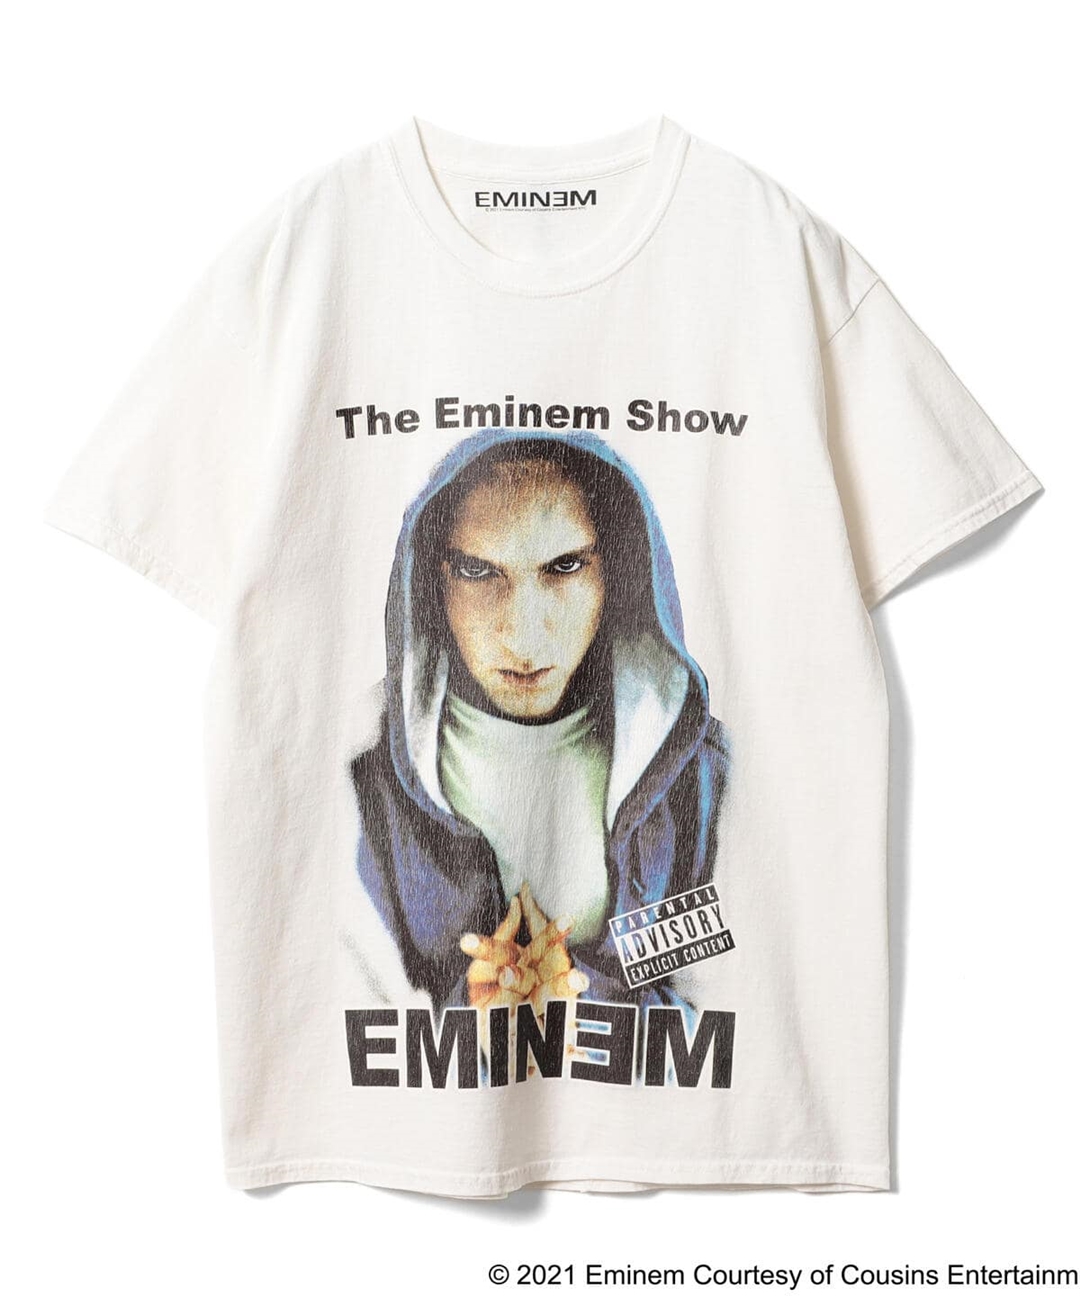 mosquitoheadRare レア 8Mile Eminem エミネム ロンt tシャツ